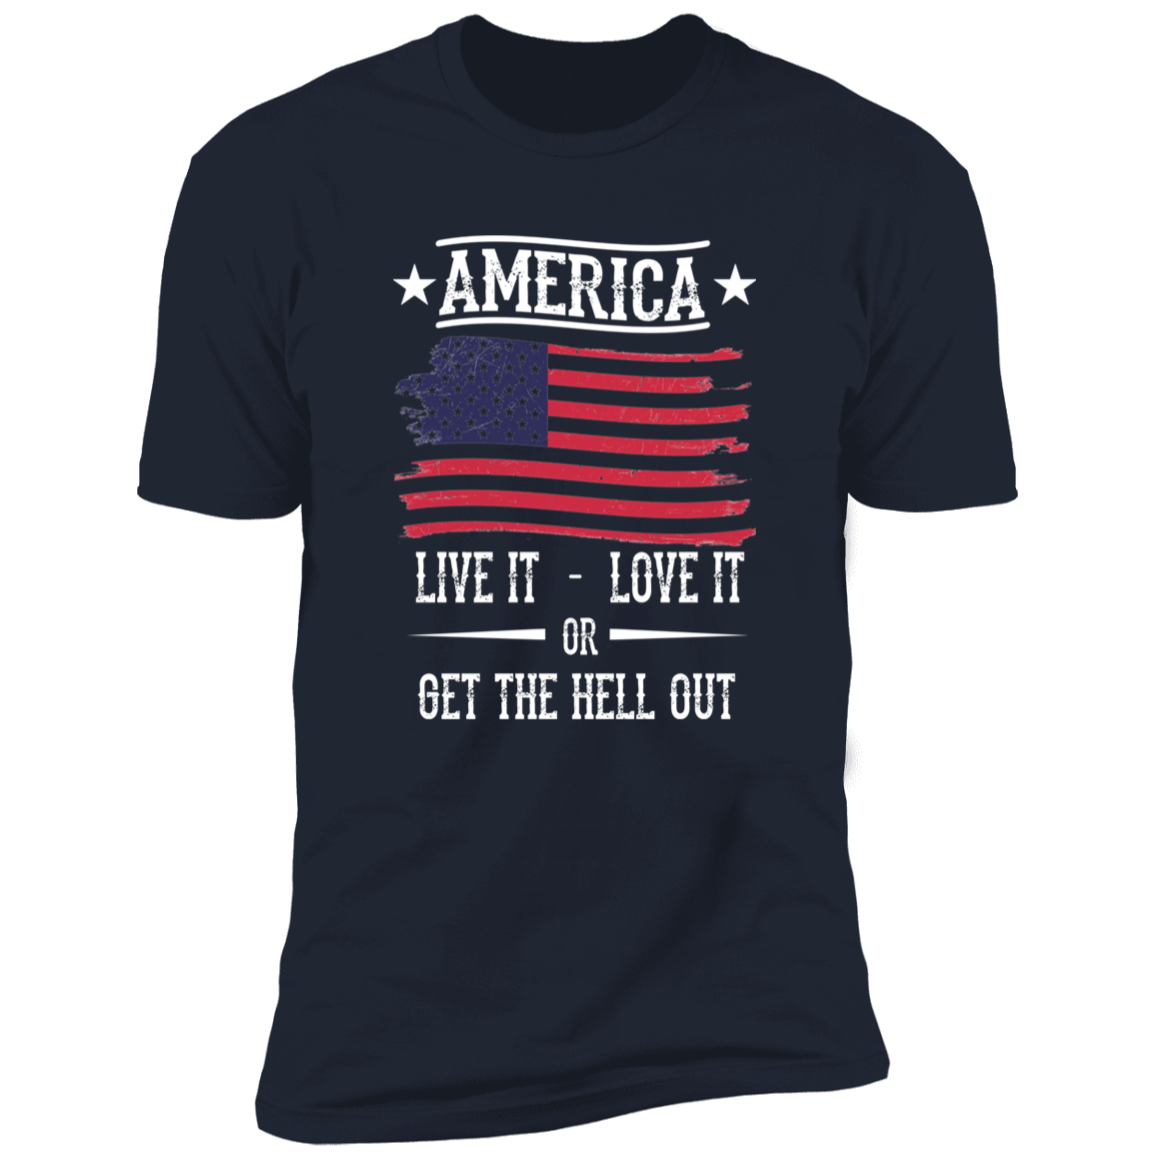 America - Live It Love it T-Shirt